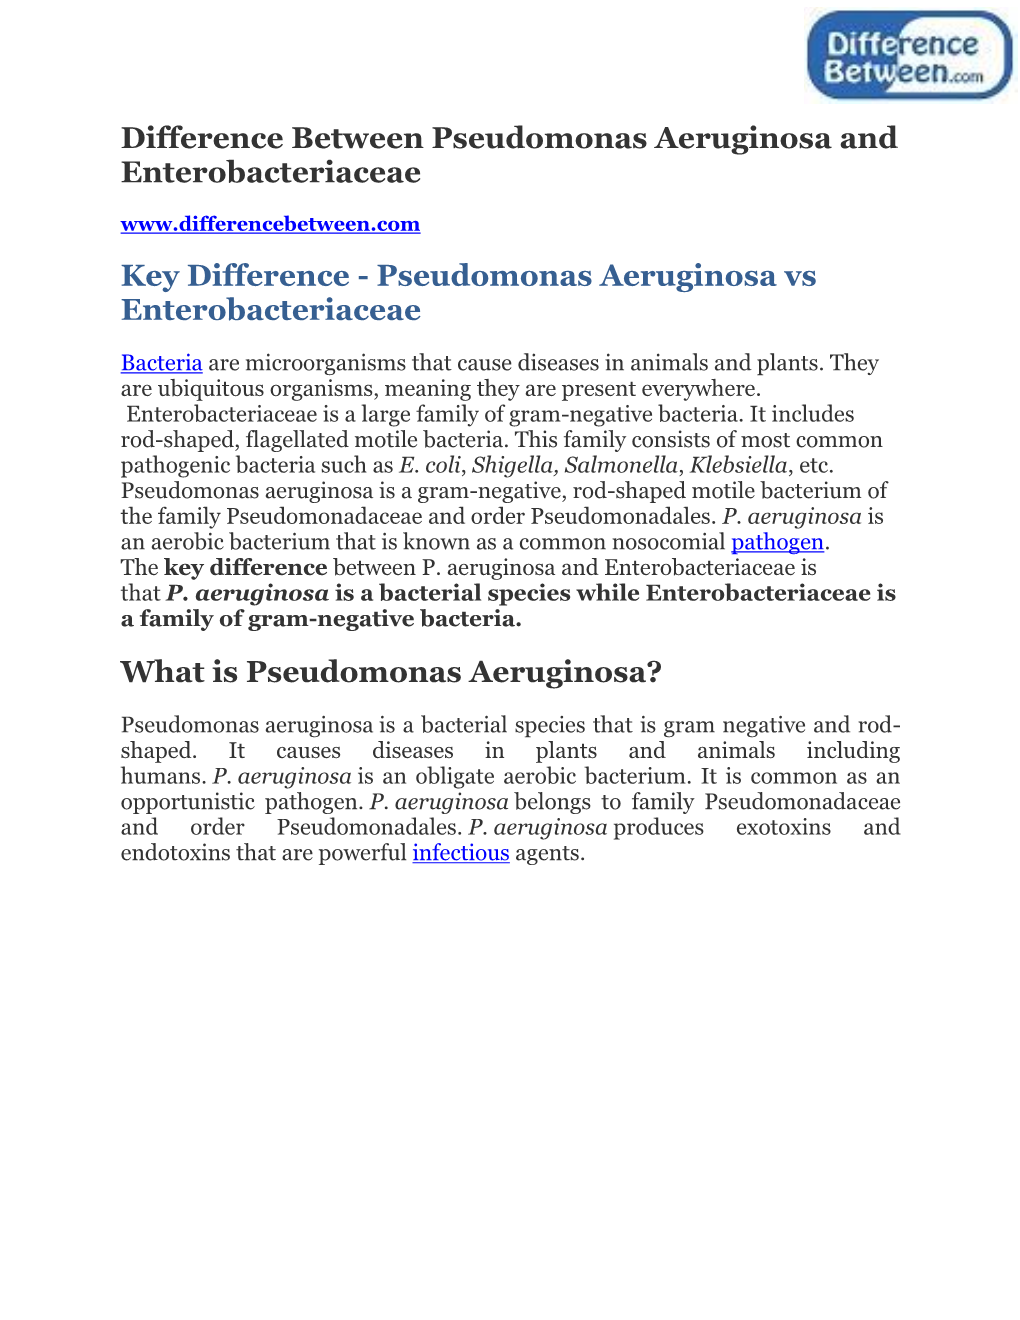 Difference Between Pseudomonas Aeruginosa and Enterobacteriaceae Key Difference - Pseudomonas Aeruginosa Vs Enterobacteriaceae